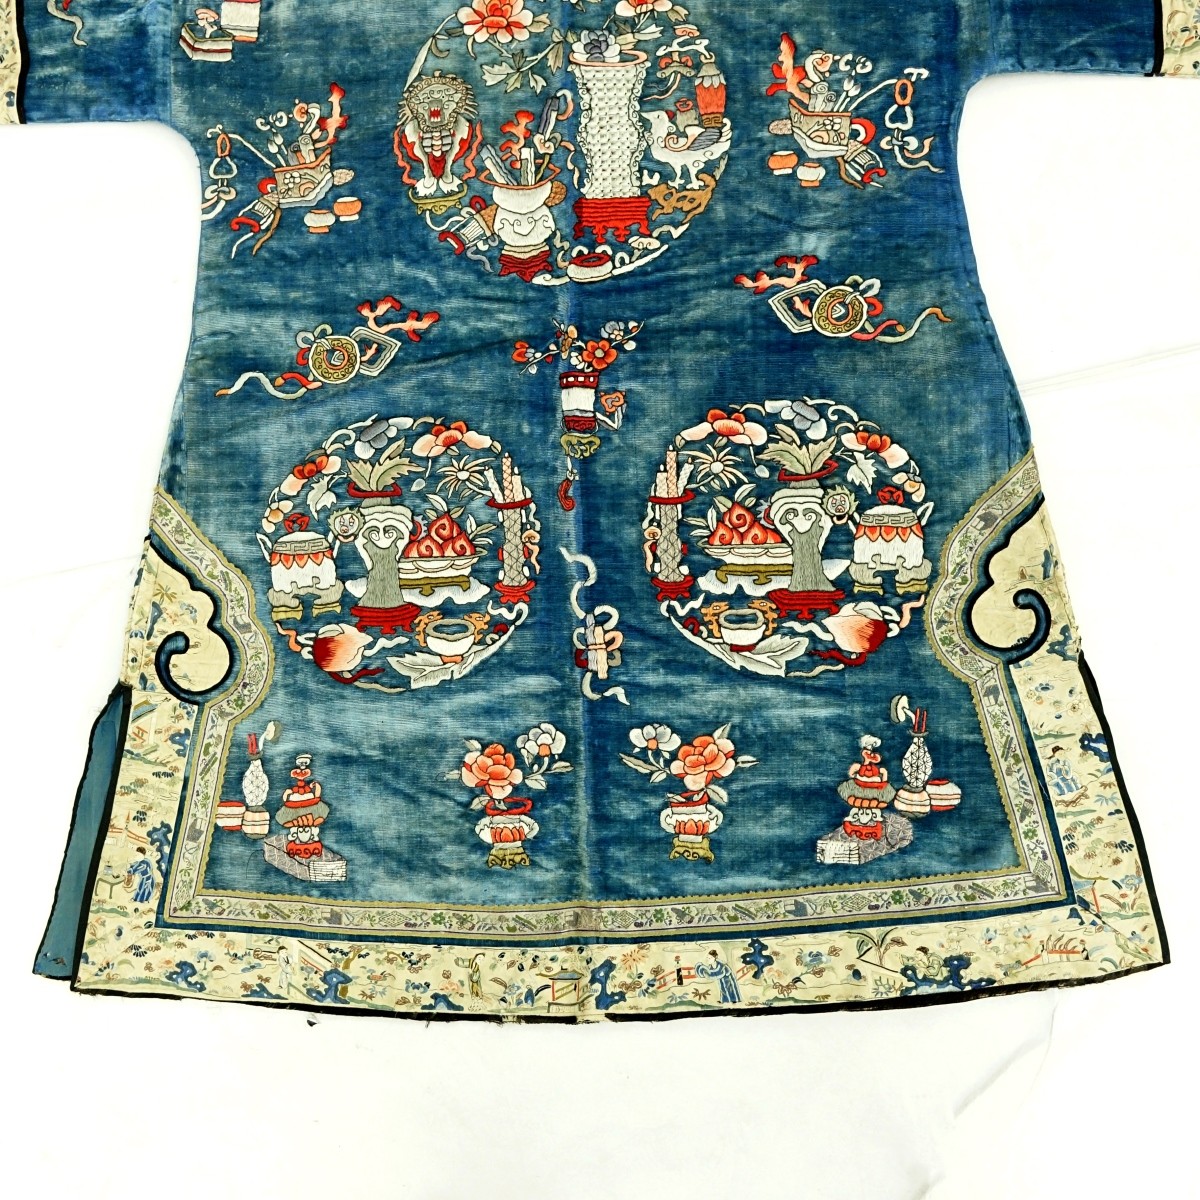 19th C Chinese Embroidered Velvet Robe